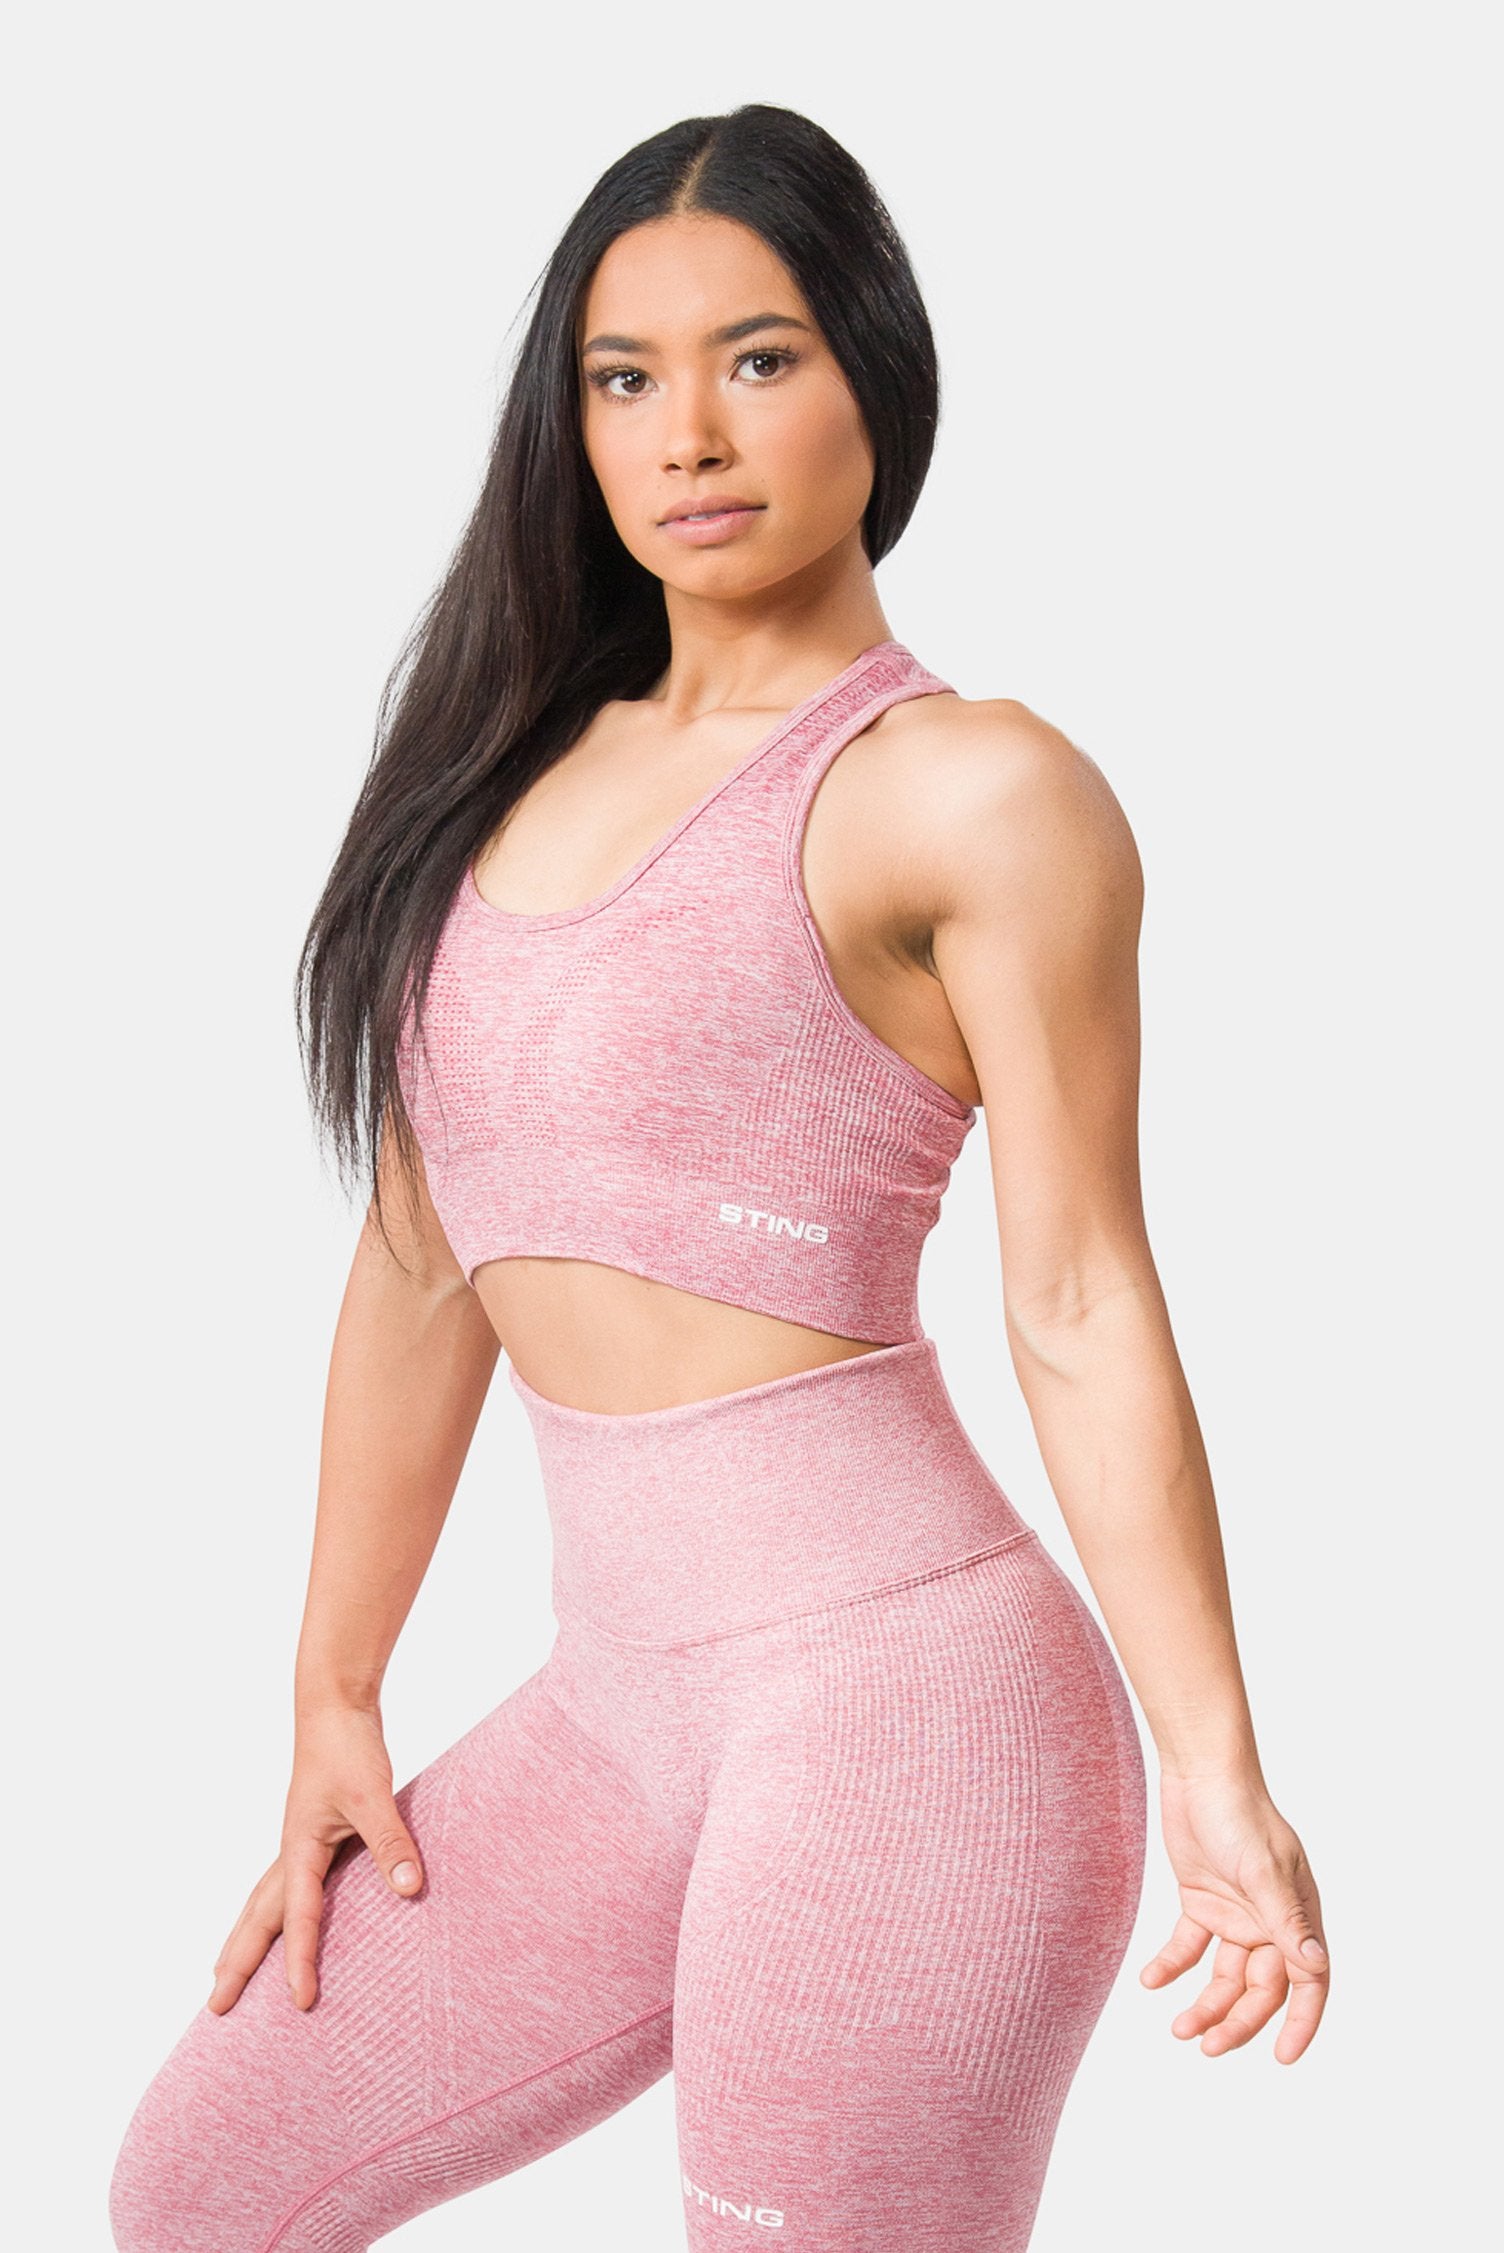 Pink Workout Pants -  Canada